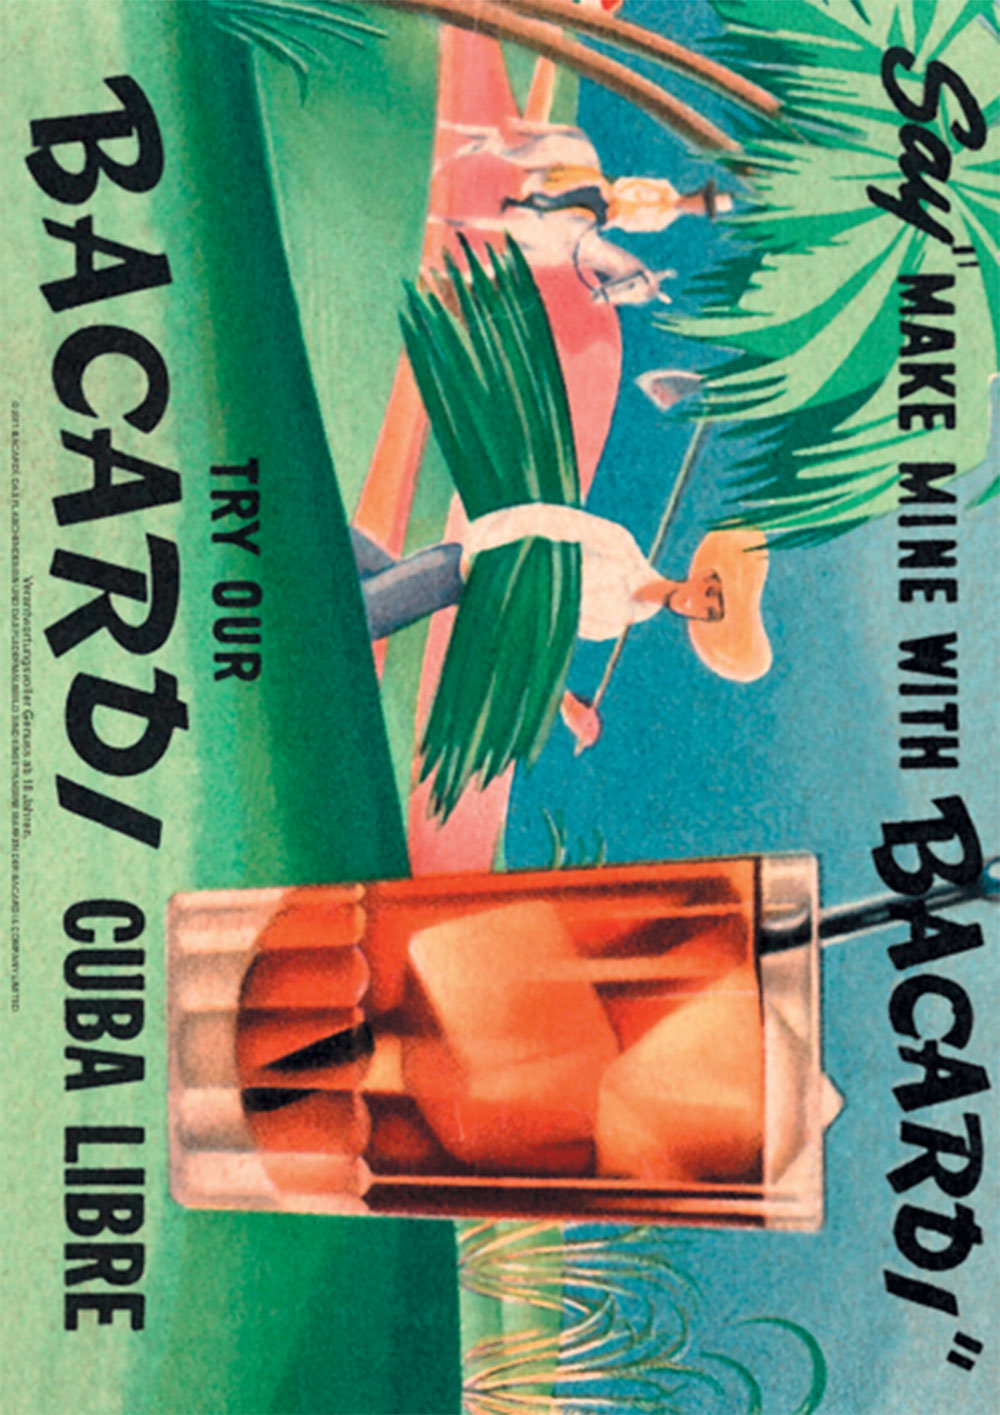 Bacardi Schuber Geschenkset - Bacardi Carta Blanca 0,7l 700ml (37,5% Vol) + 2x Coca Cola 200ml + 2x Bacardi Gläser - Inkl. Pfand MEHRWEG